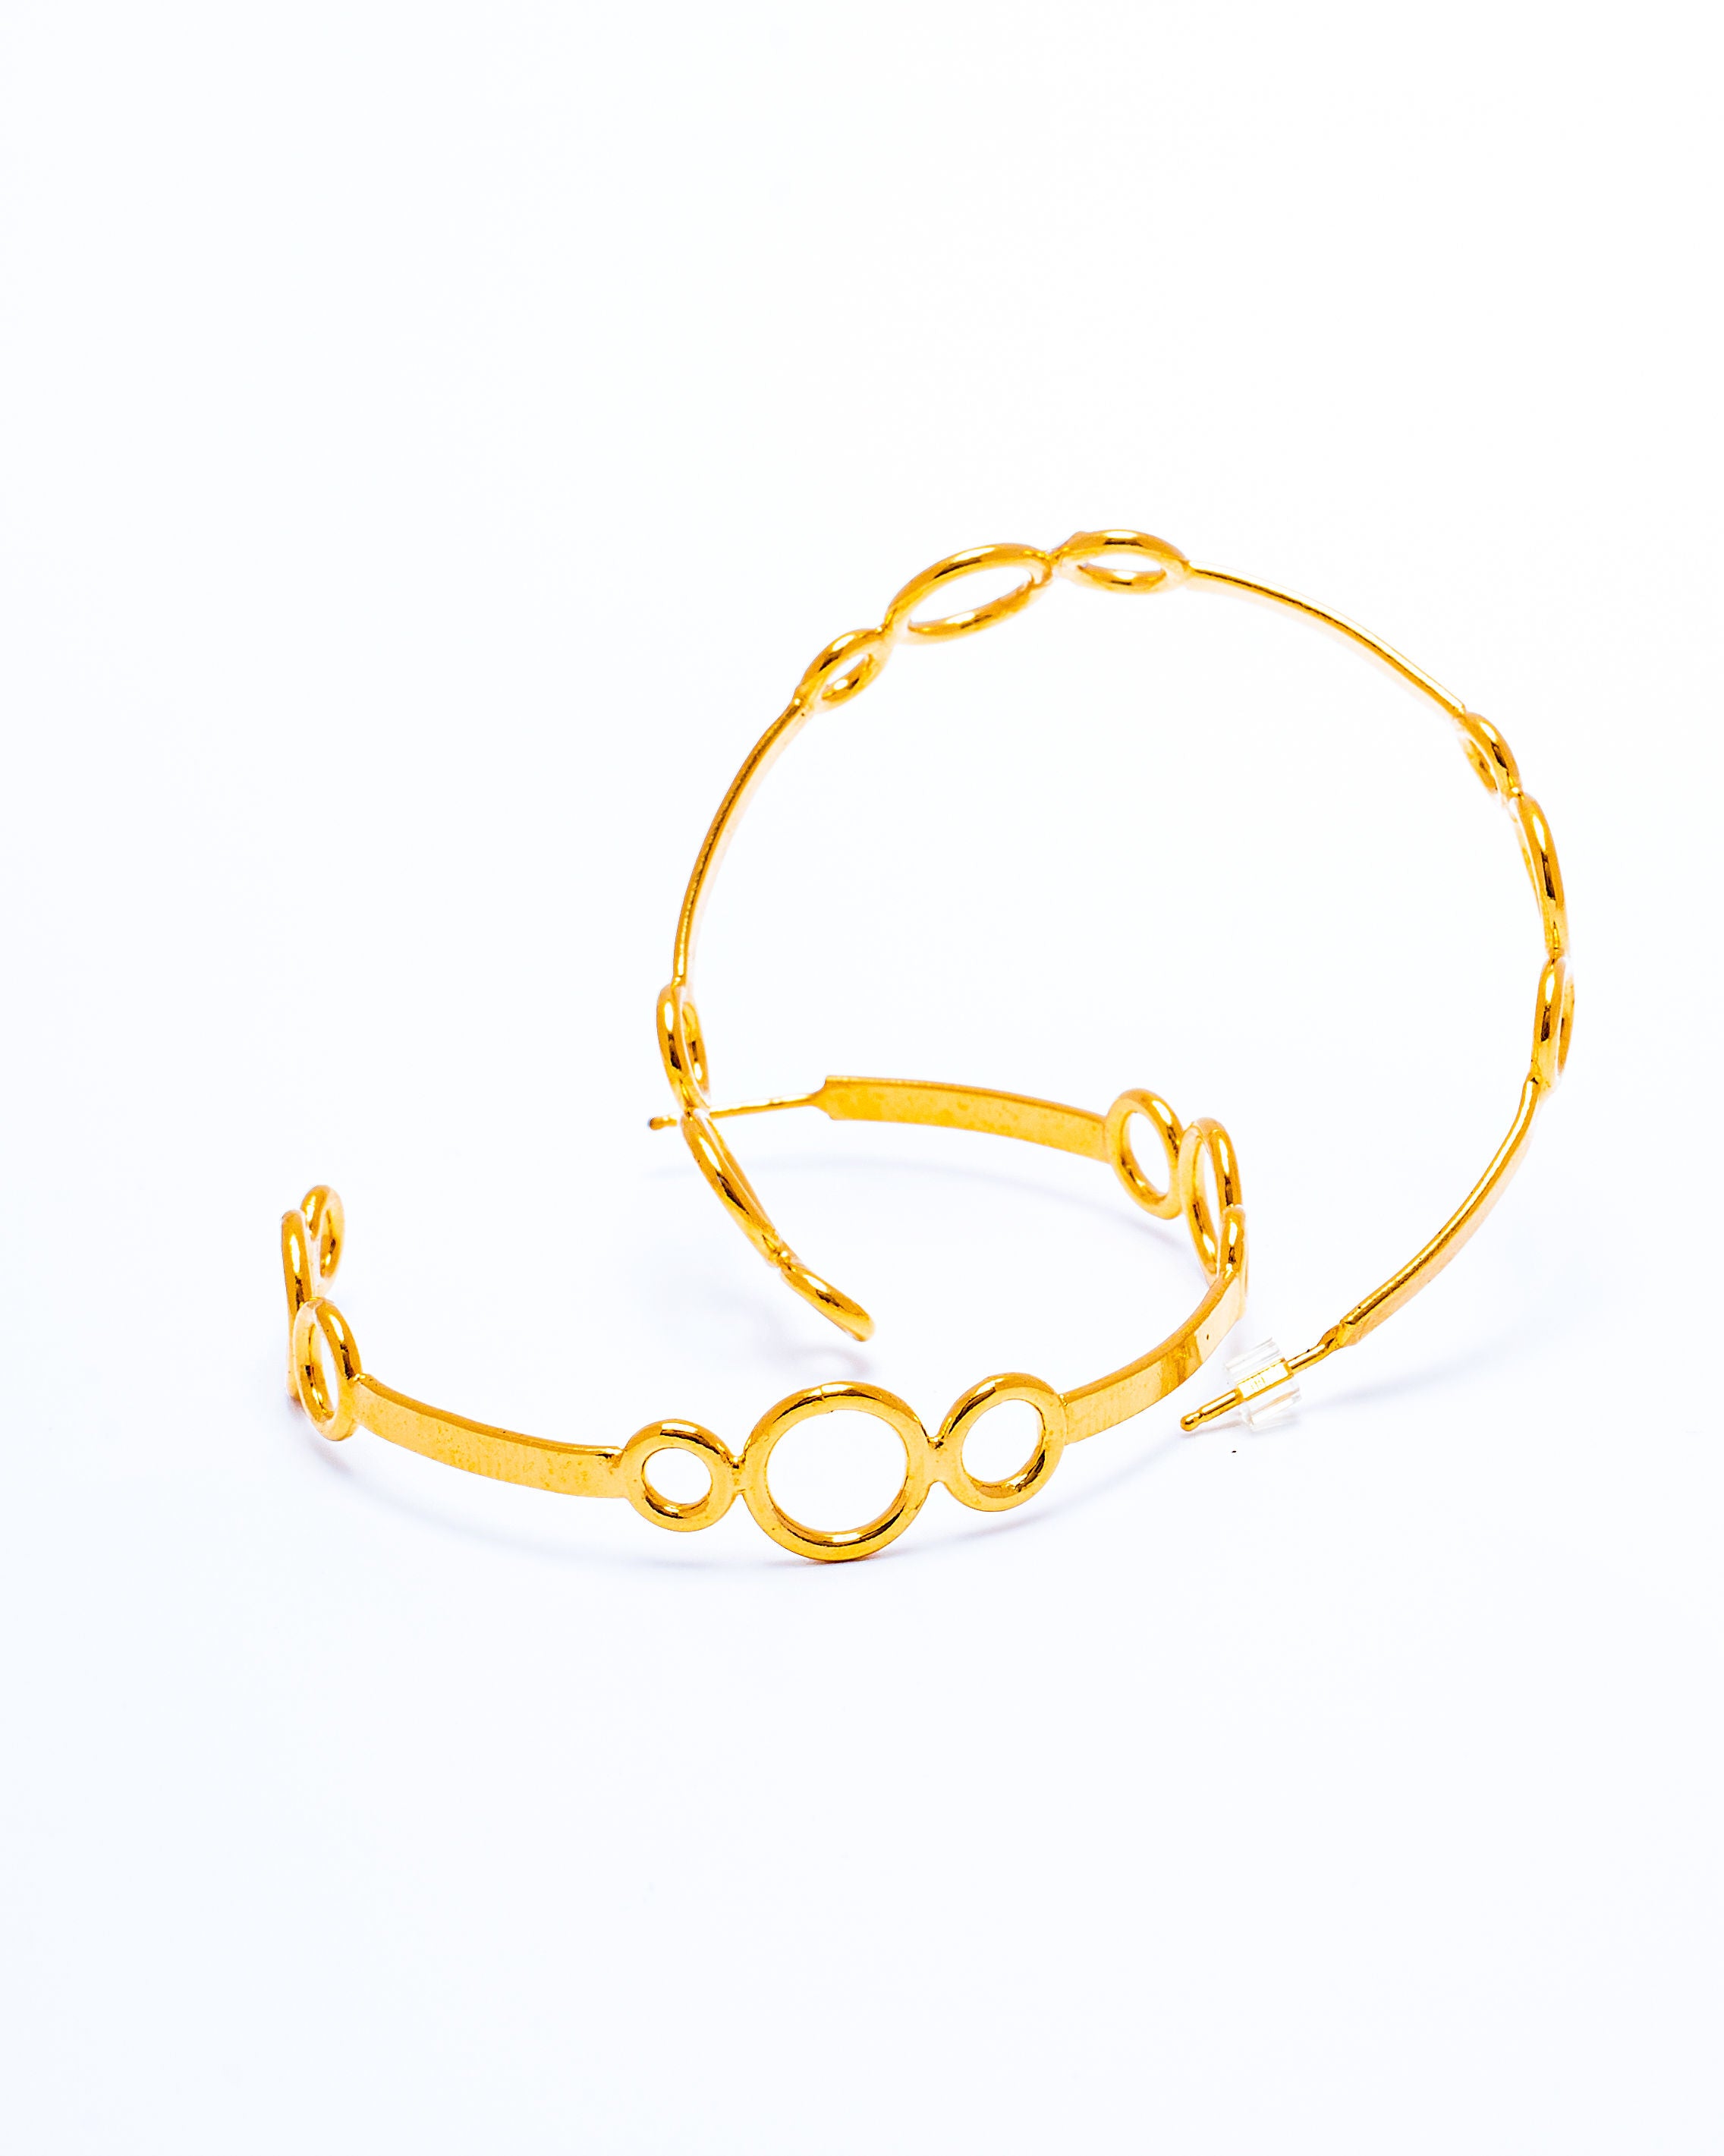 gold hoops by zivanora jewellery